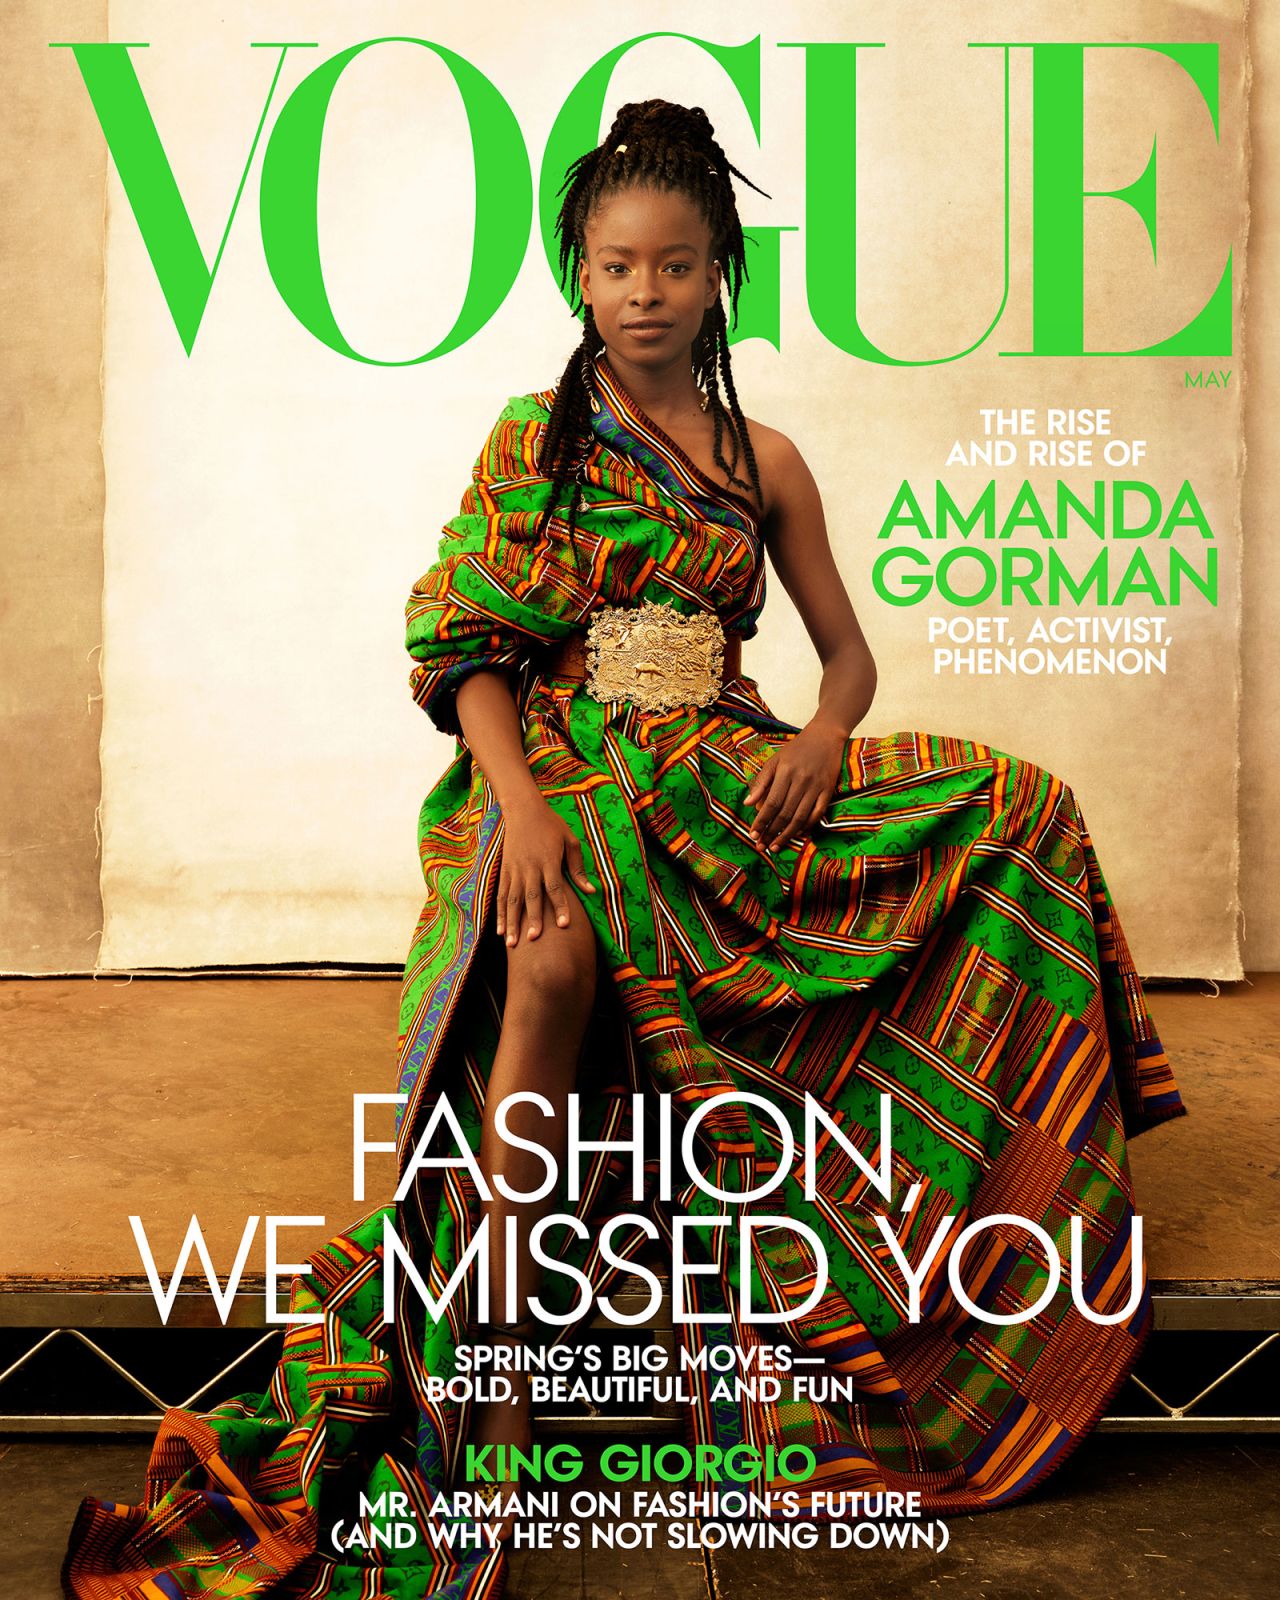 Amanda Gorman on the cover of Vogue.